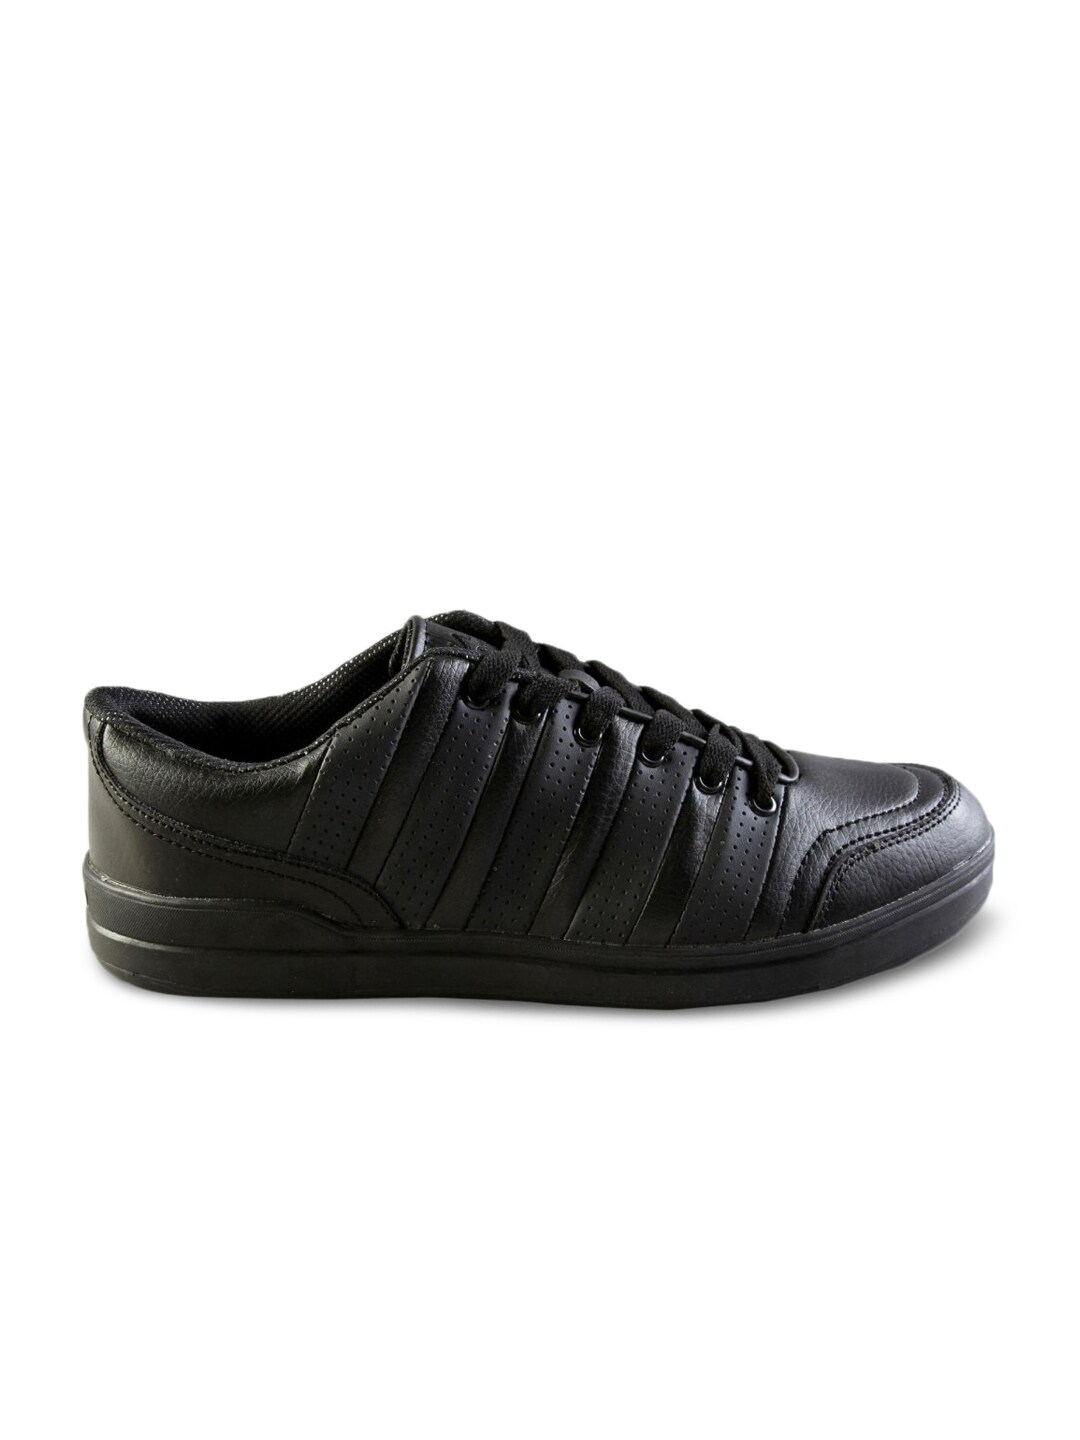 Numero Uno Men's Casual Black Shoes